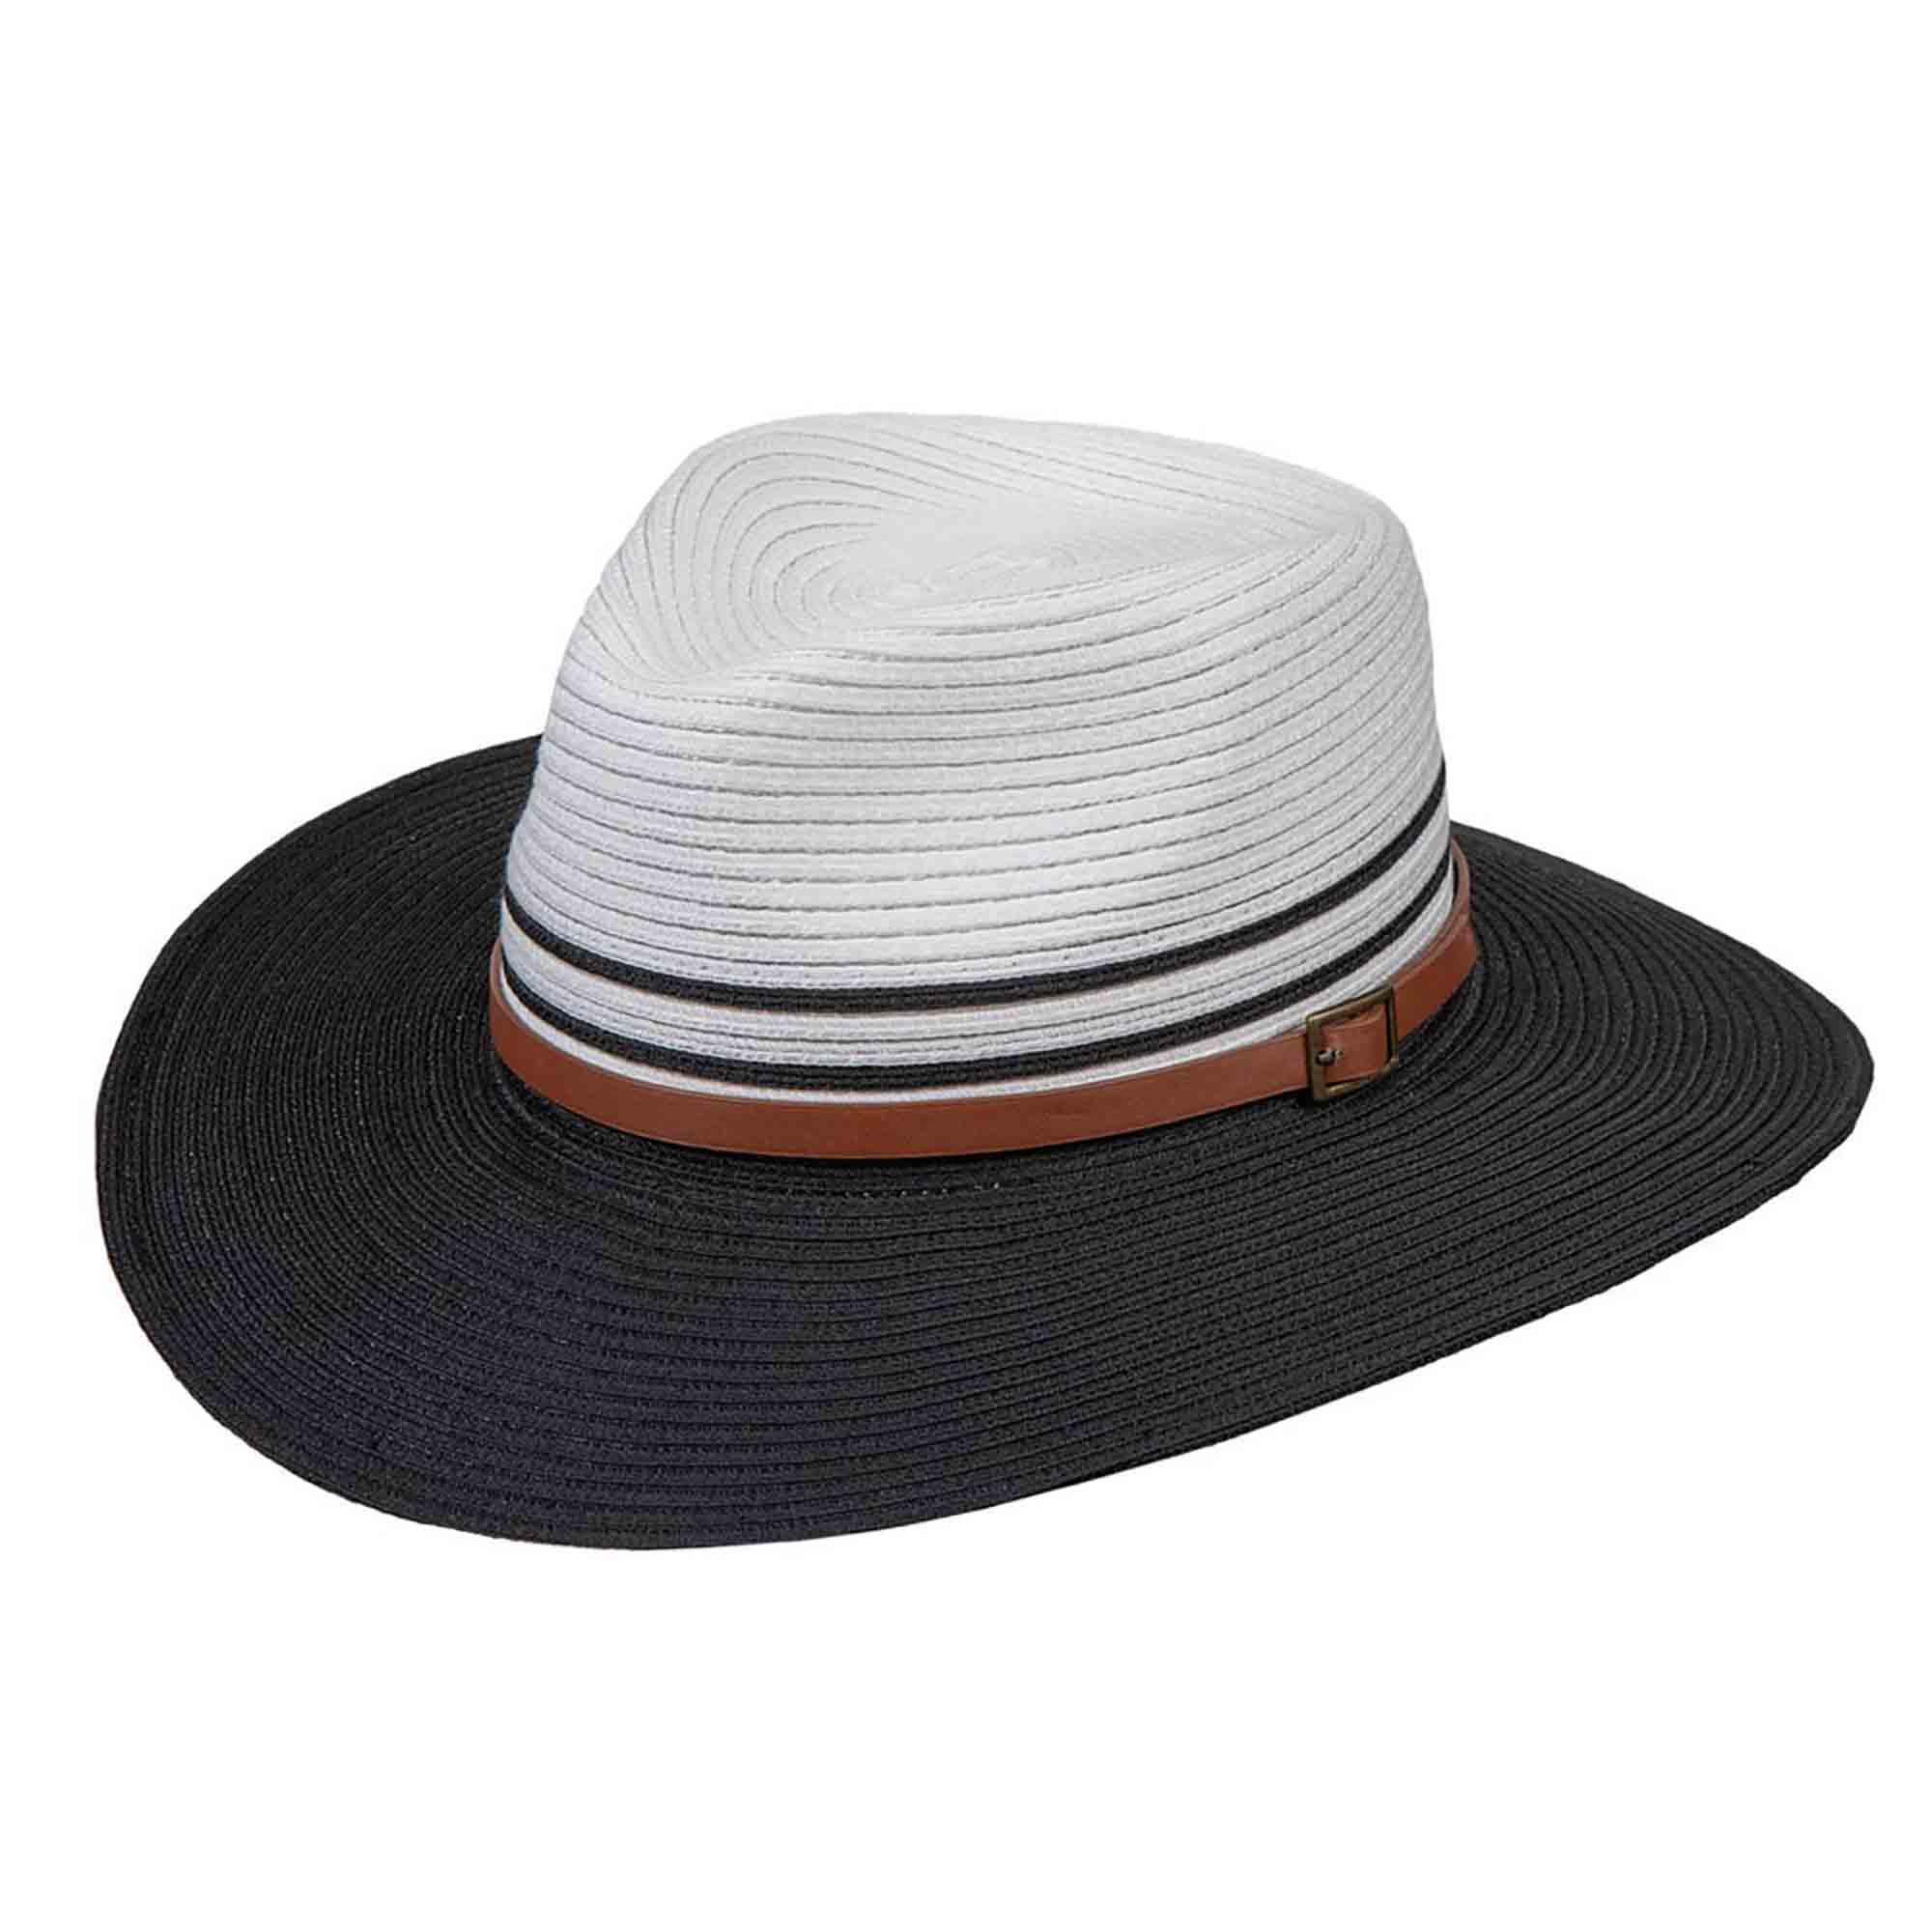 Lightweight Two Tone Fedora Hat - Karen Keith Hats Safari Hat Great hats by Karen Keith P14-A White/Black OS 